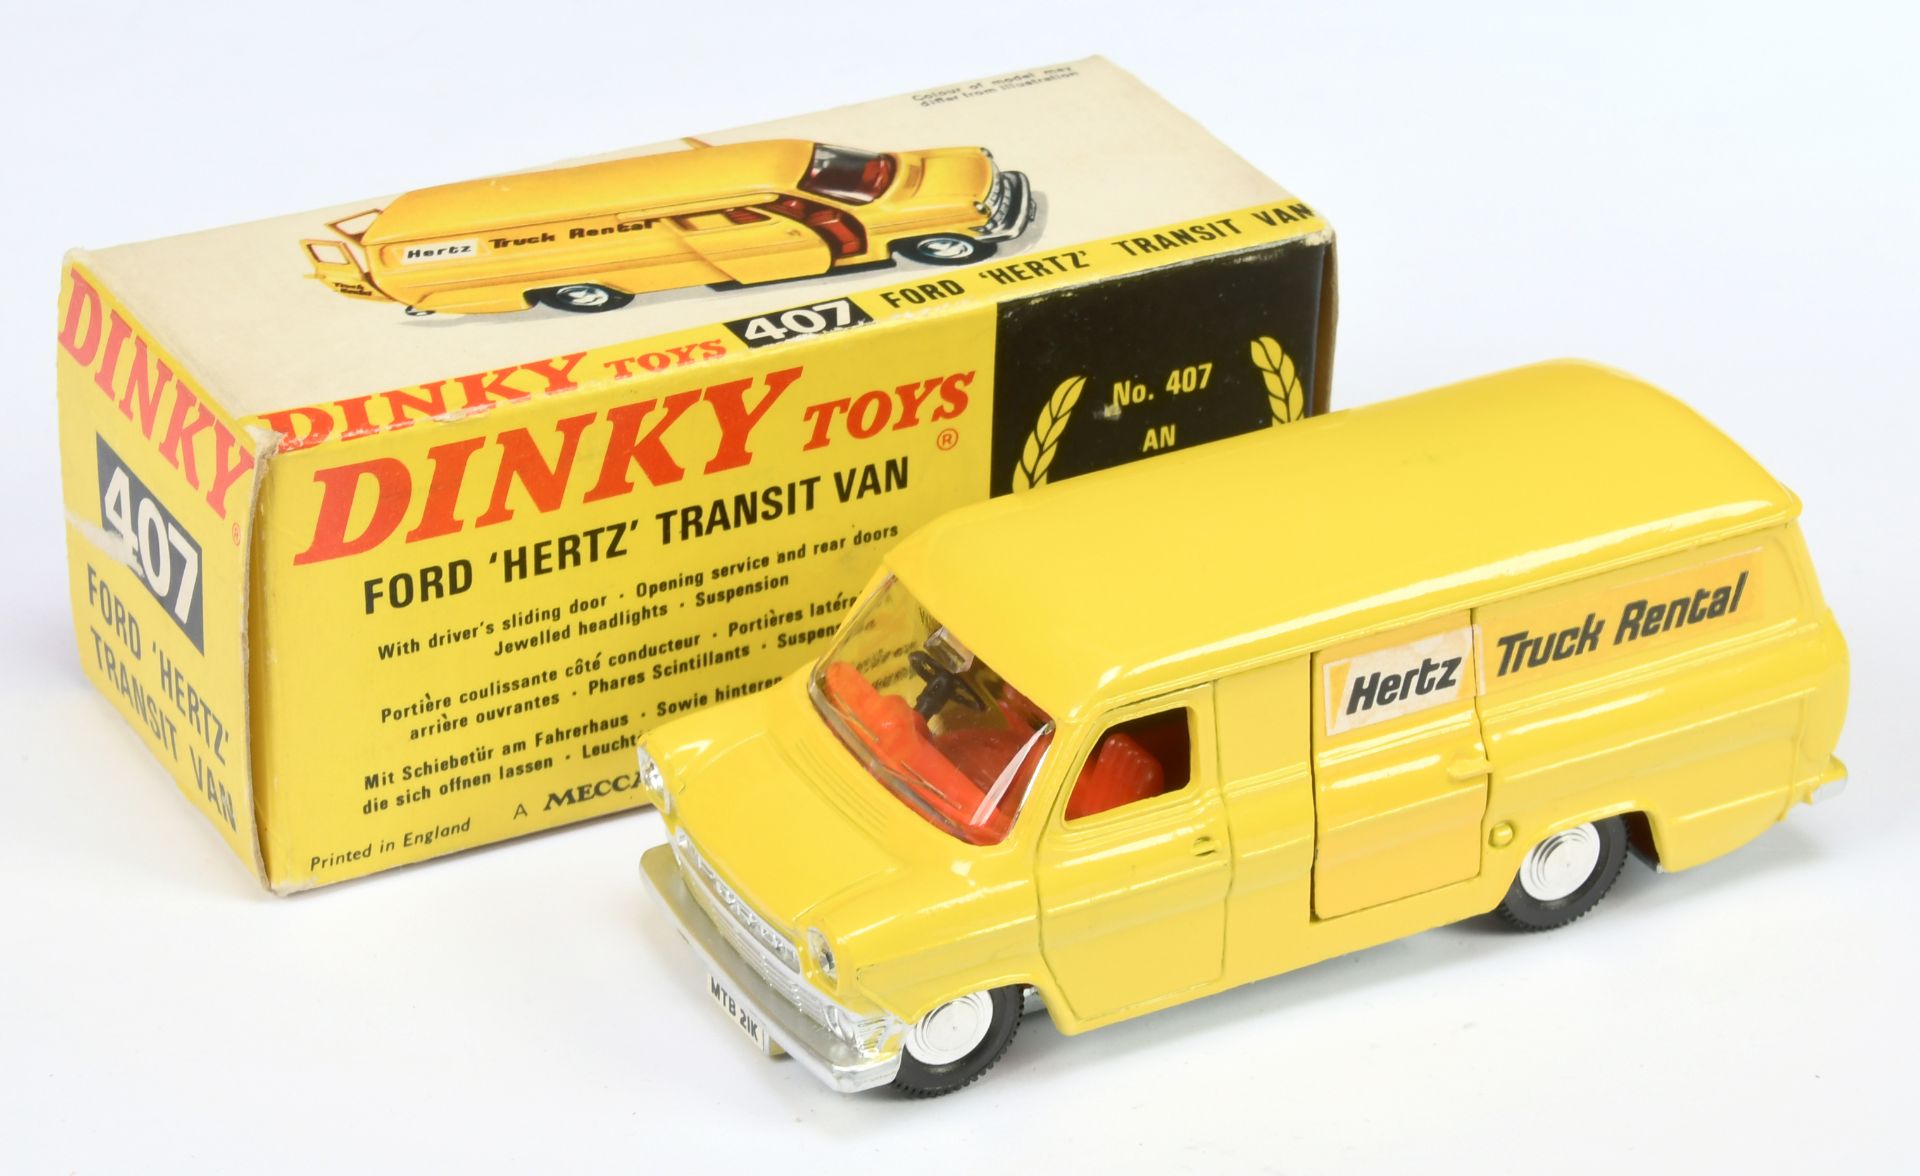 Dinky Toys 407 Ford transit van "Hertz Van Rental"  - Yellow body and opening doors, bare metal b...